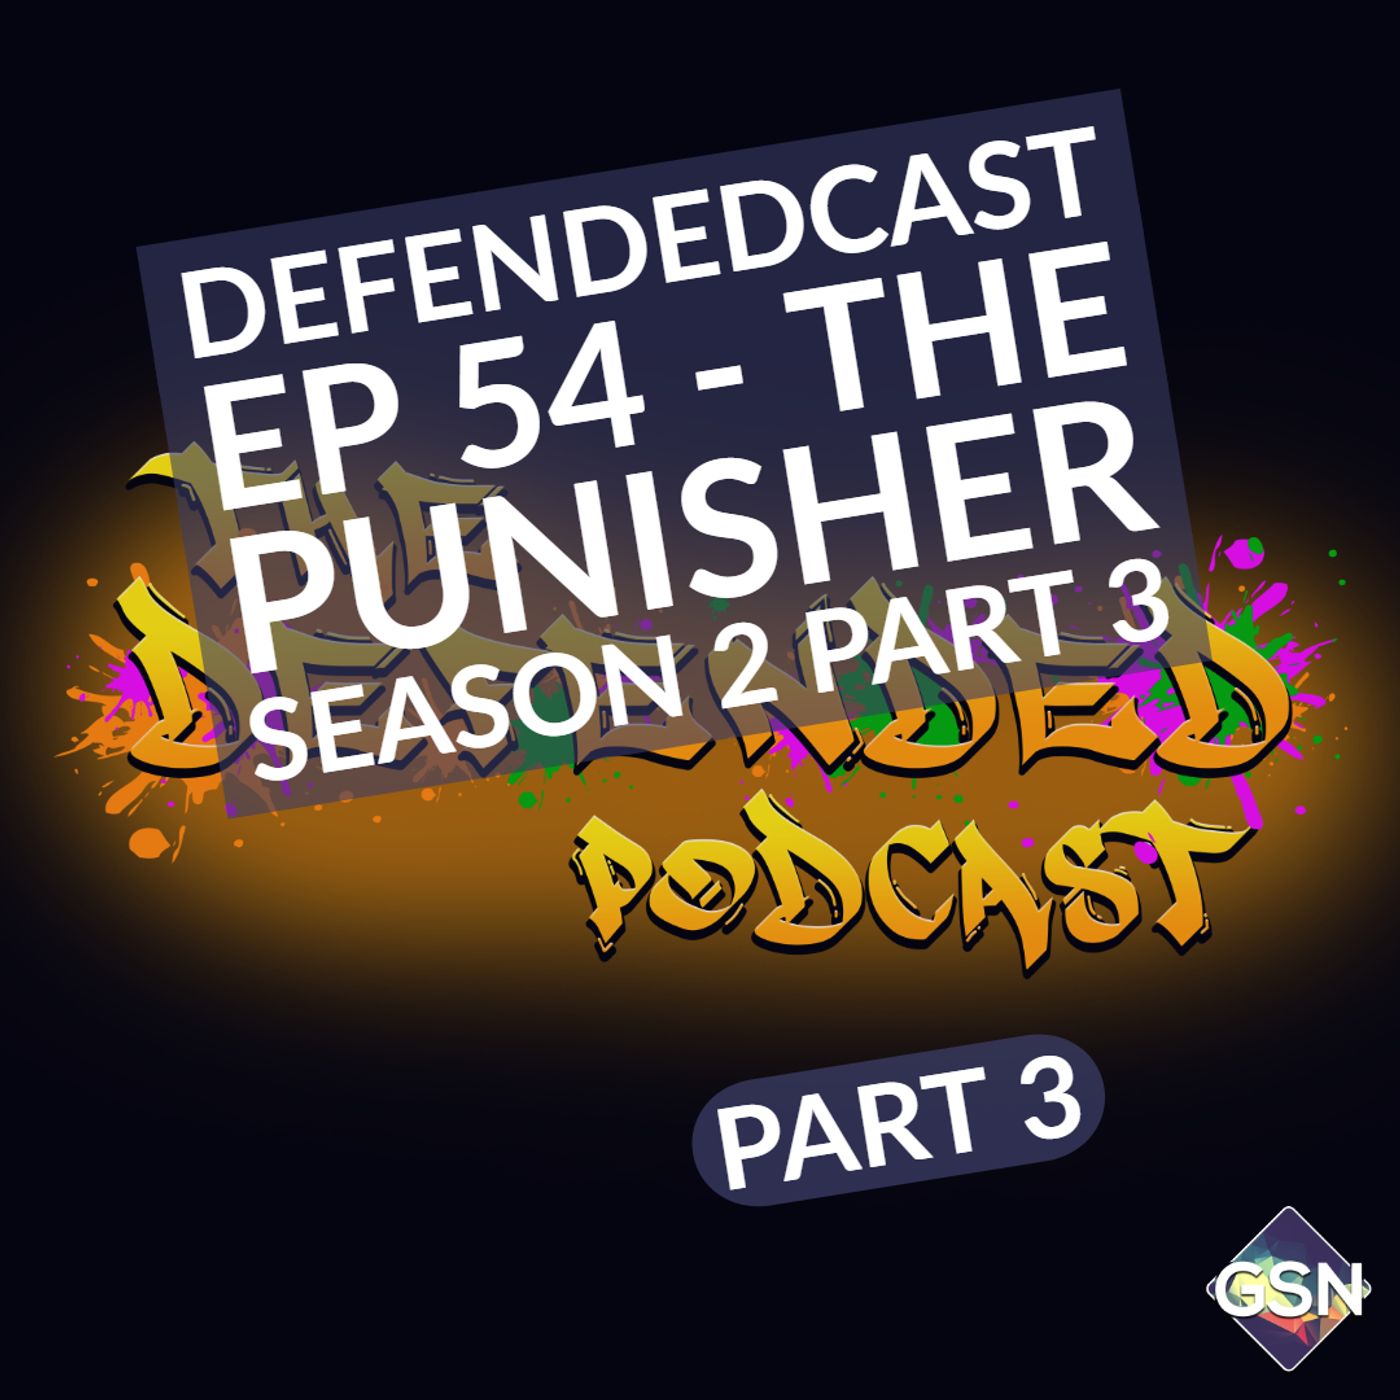 Defendedcast Ep 55 - The Punisher Season 2 Part 3